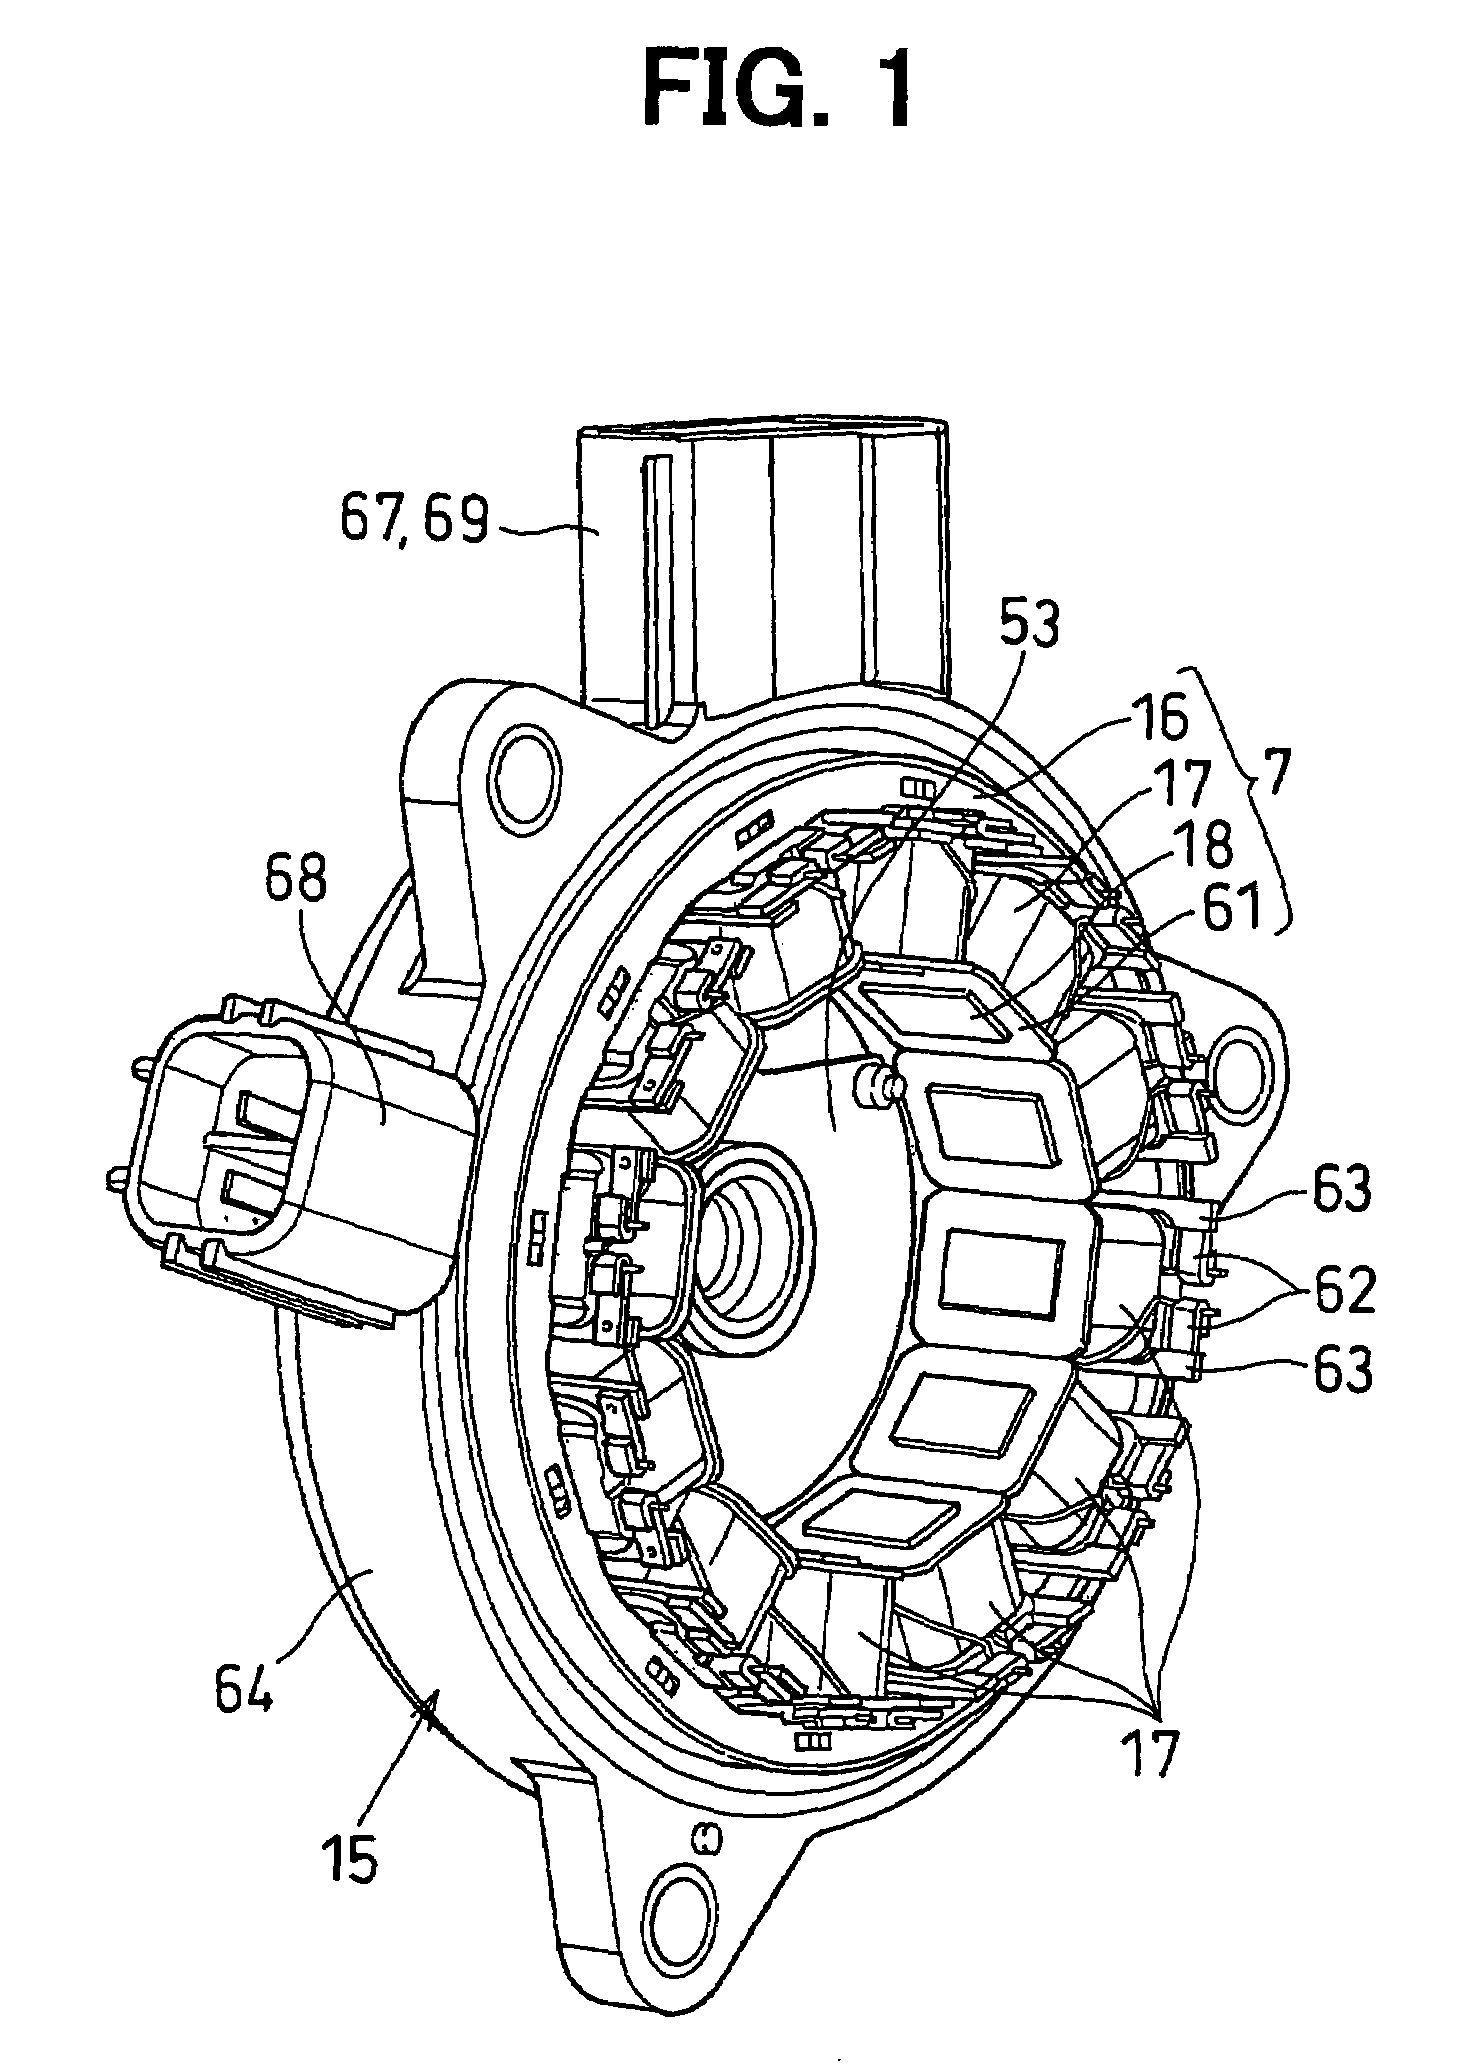 Rotary electric machine